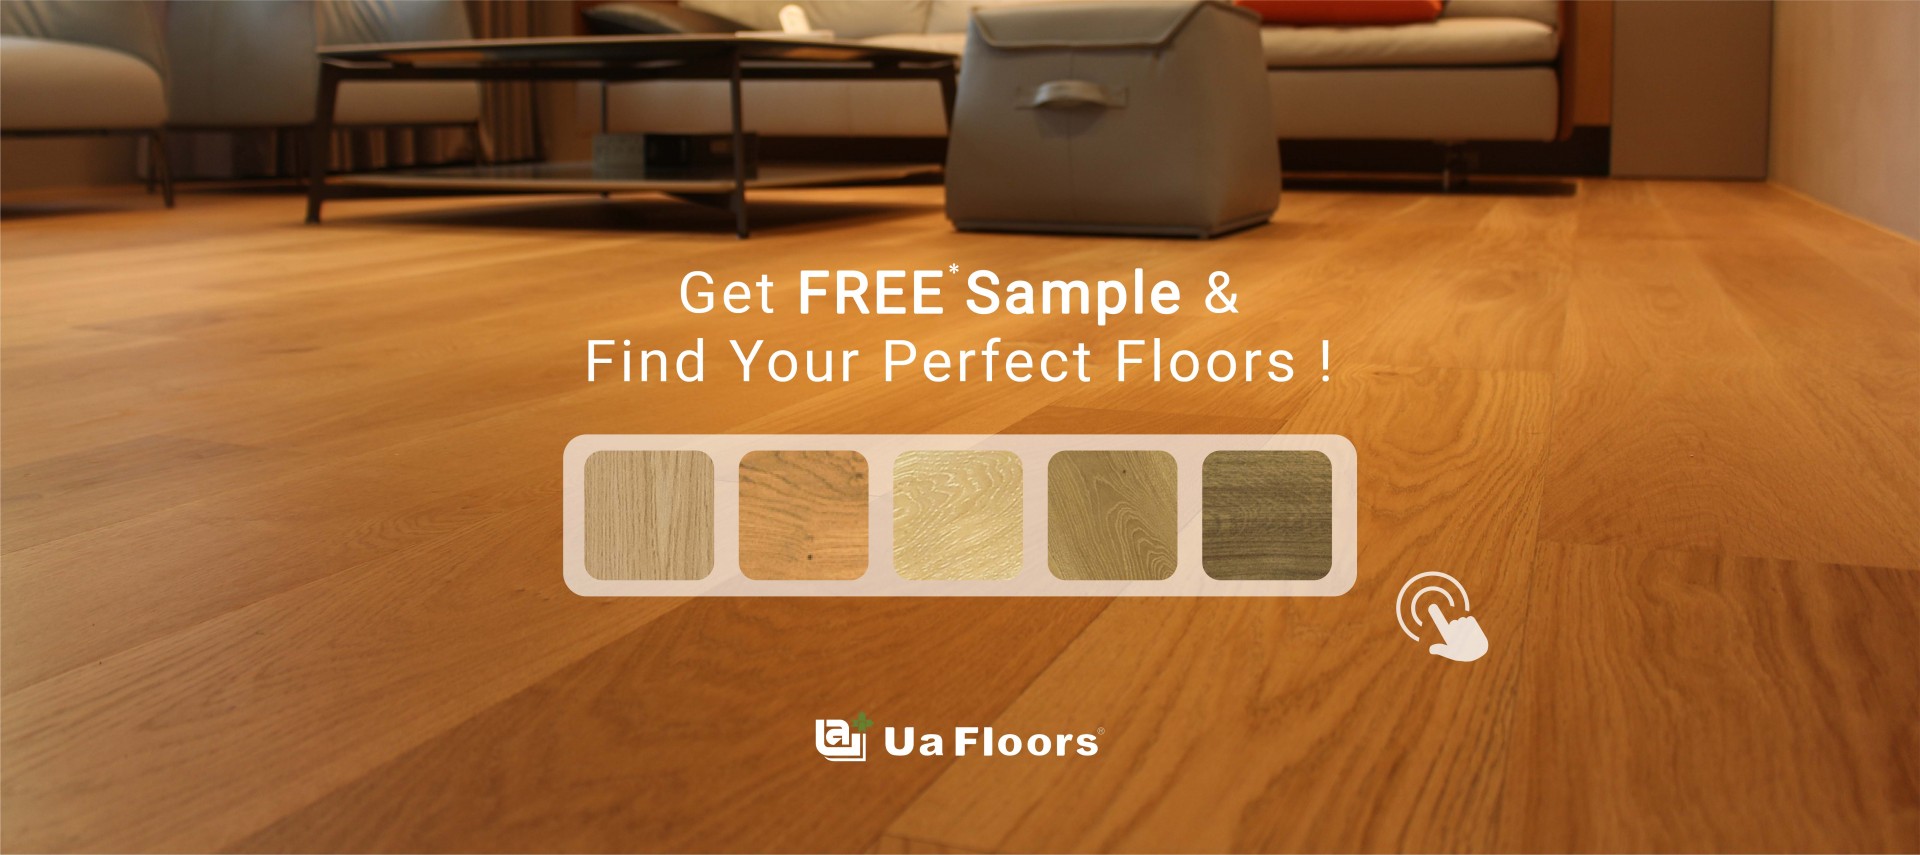 Get furniture samples for free